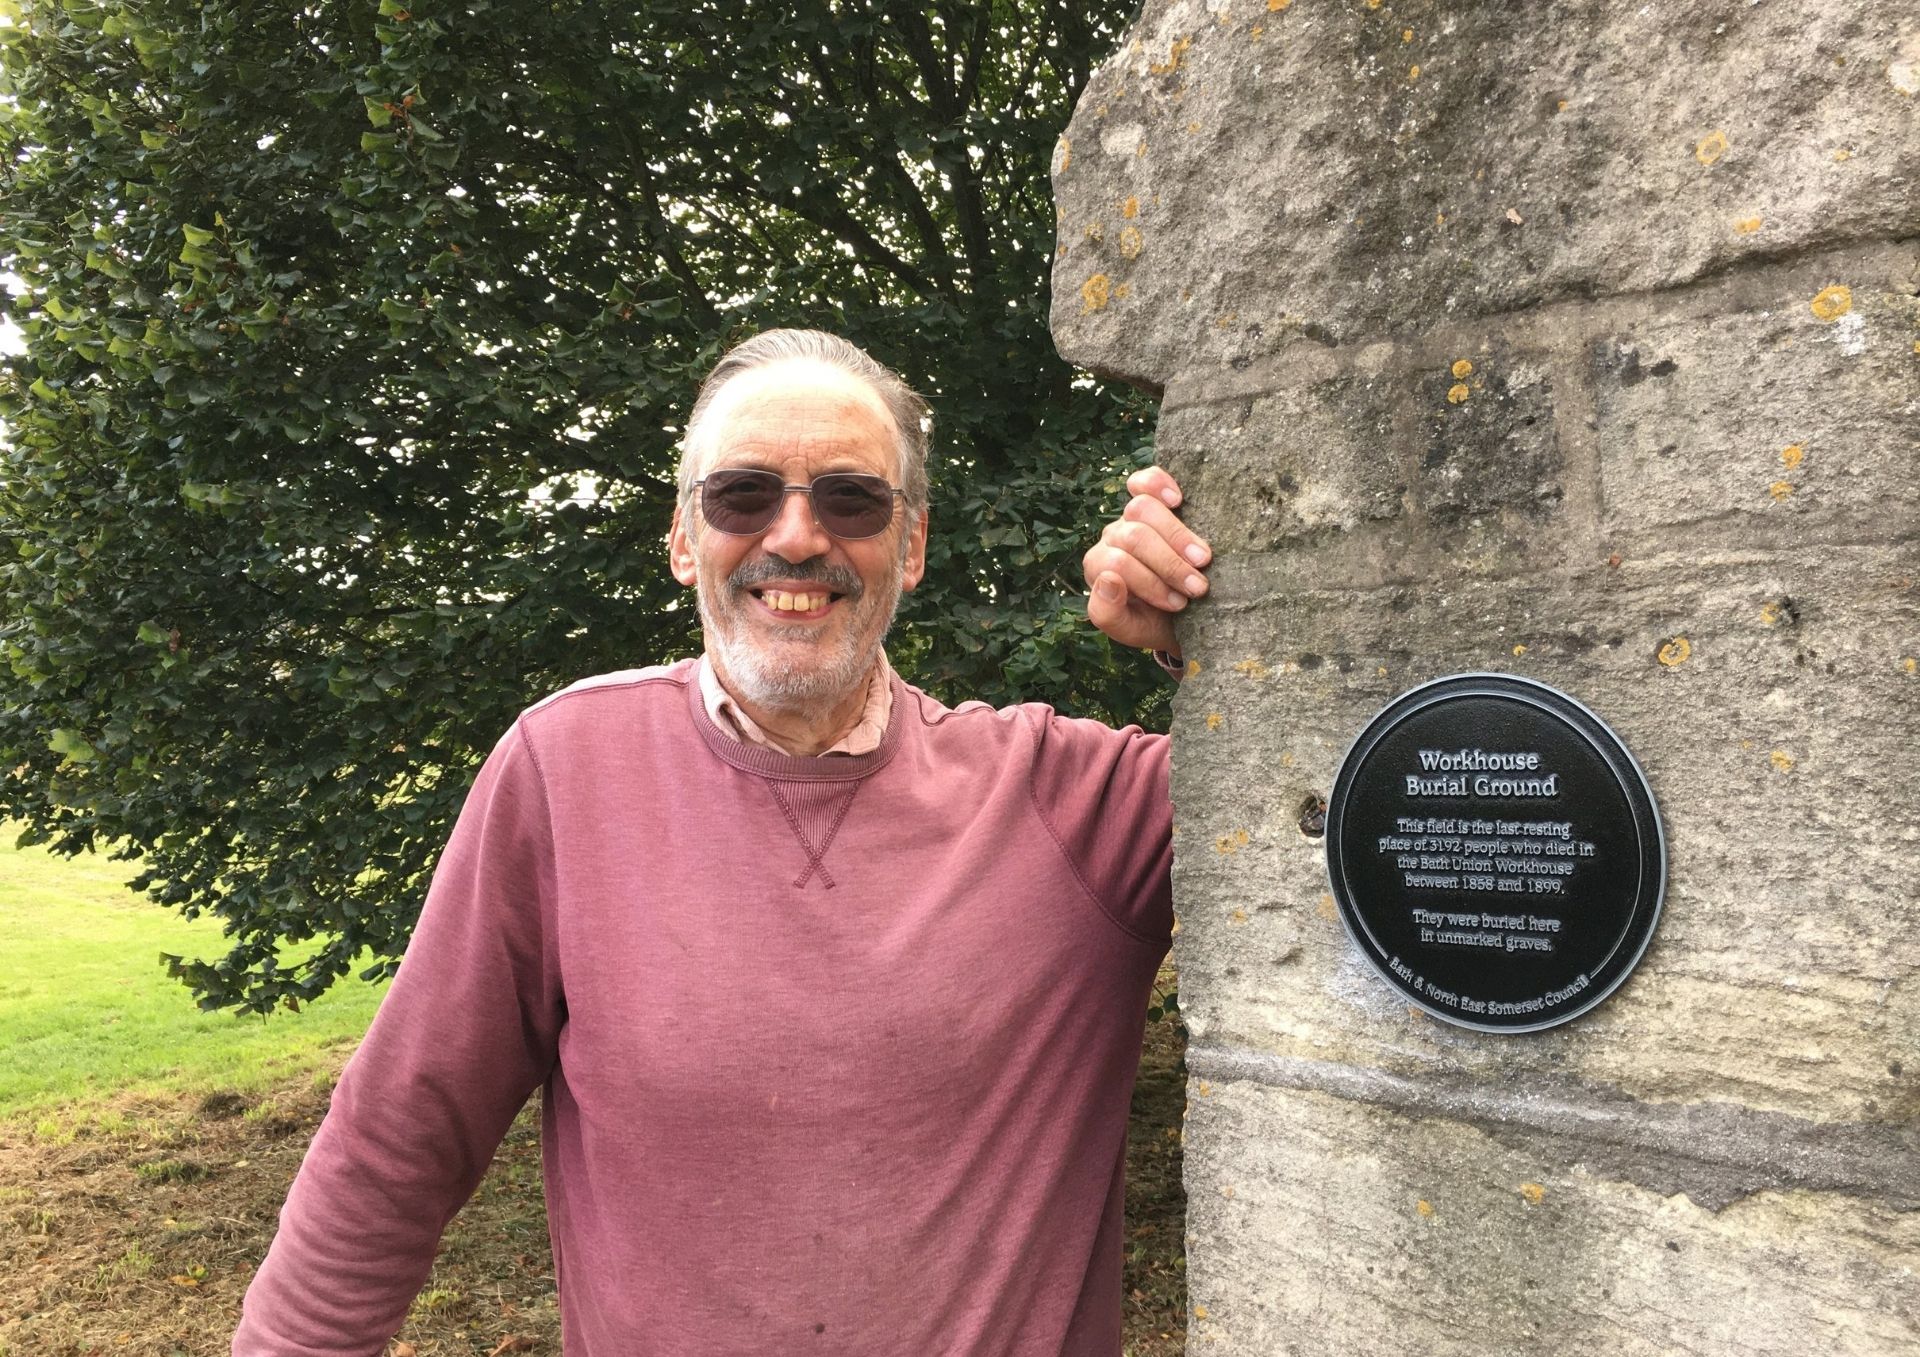 John Payne standing next to plaque marking burial ground